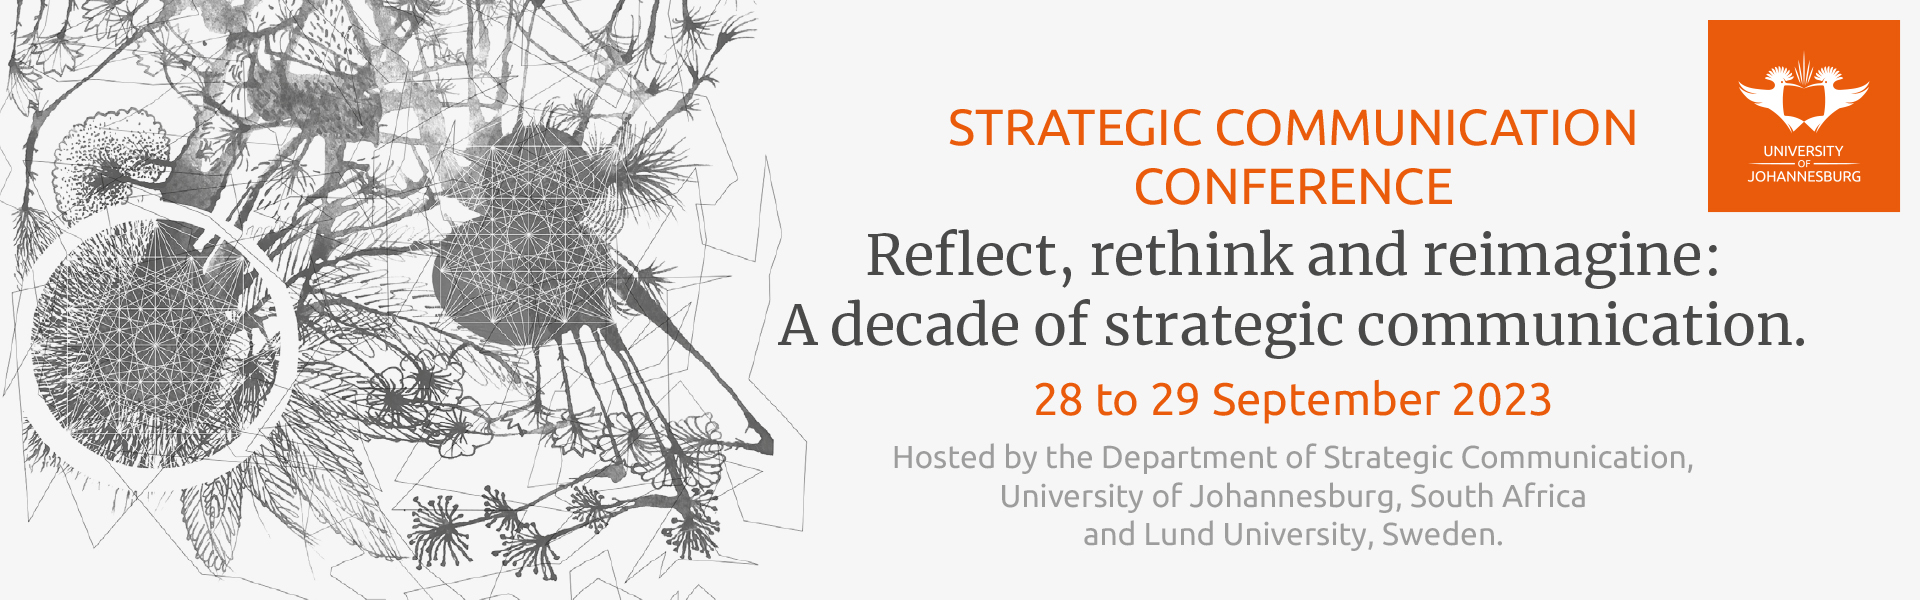 strategic-communication-conference